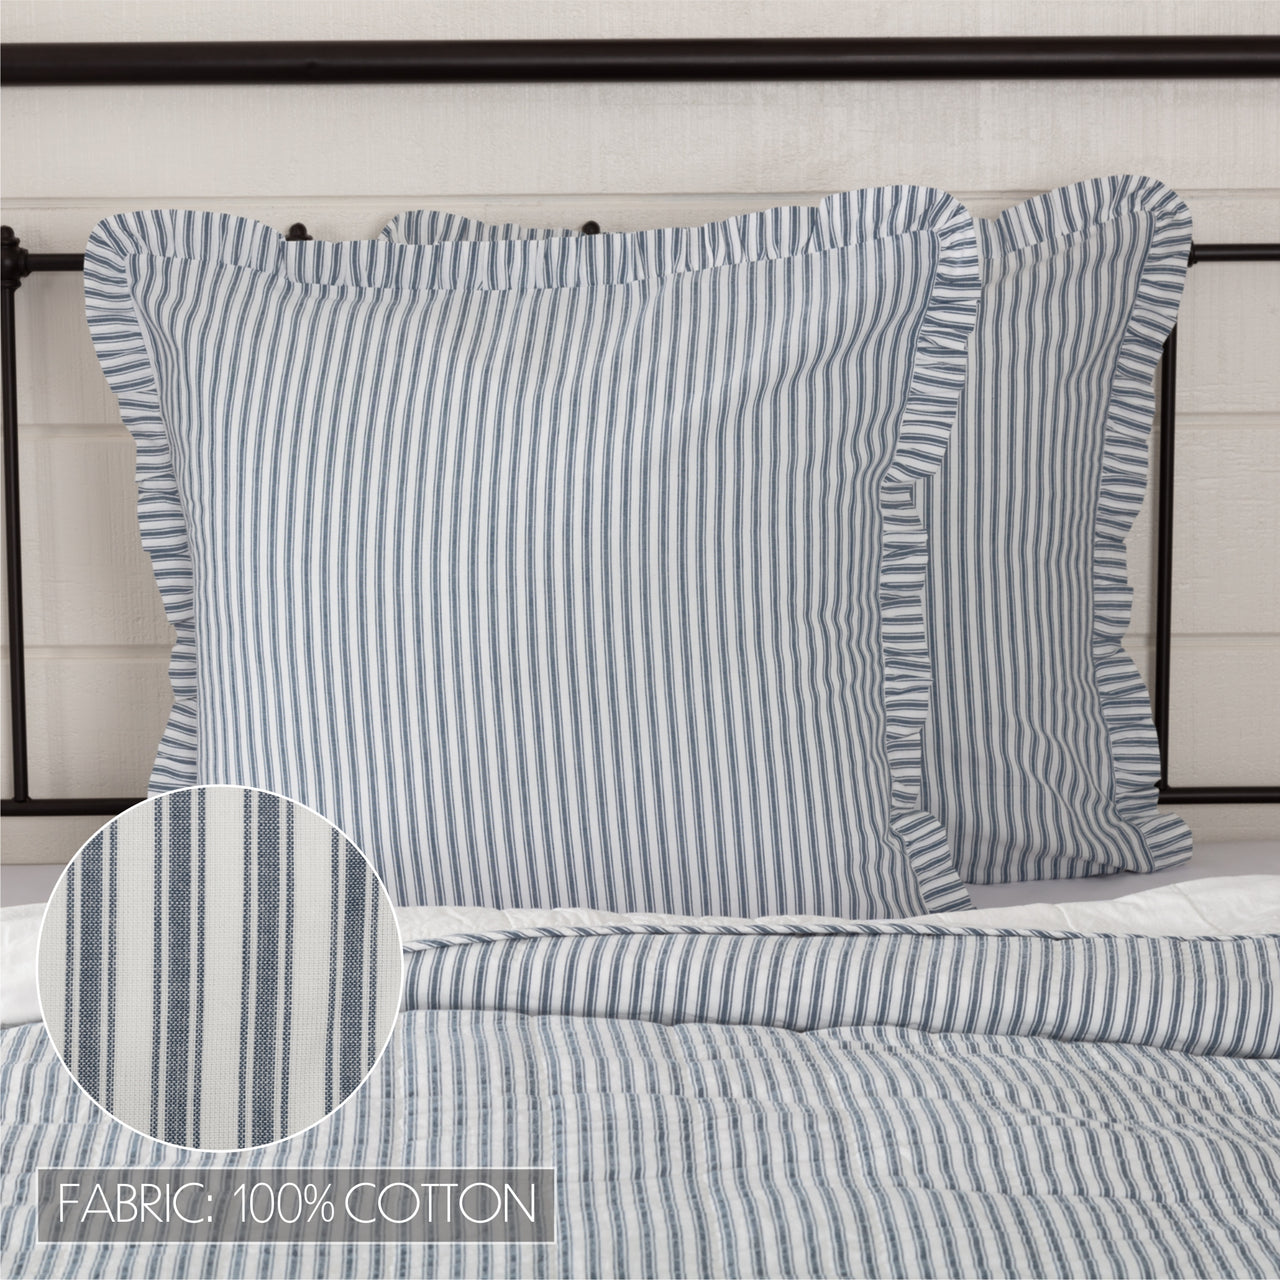 Sawyer Mill Blue Ticking Stripe Fabric Euro Sham 26x26 VHC Brands